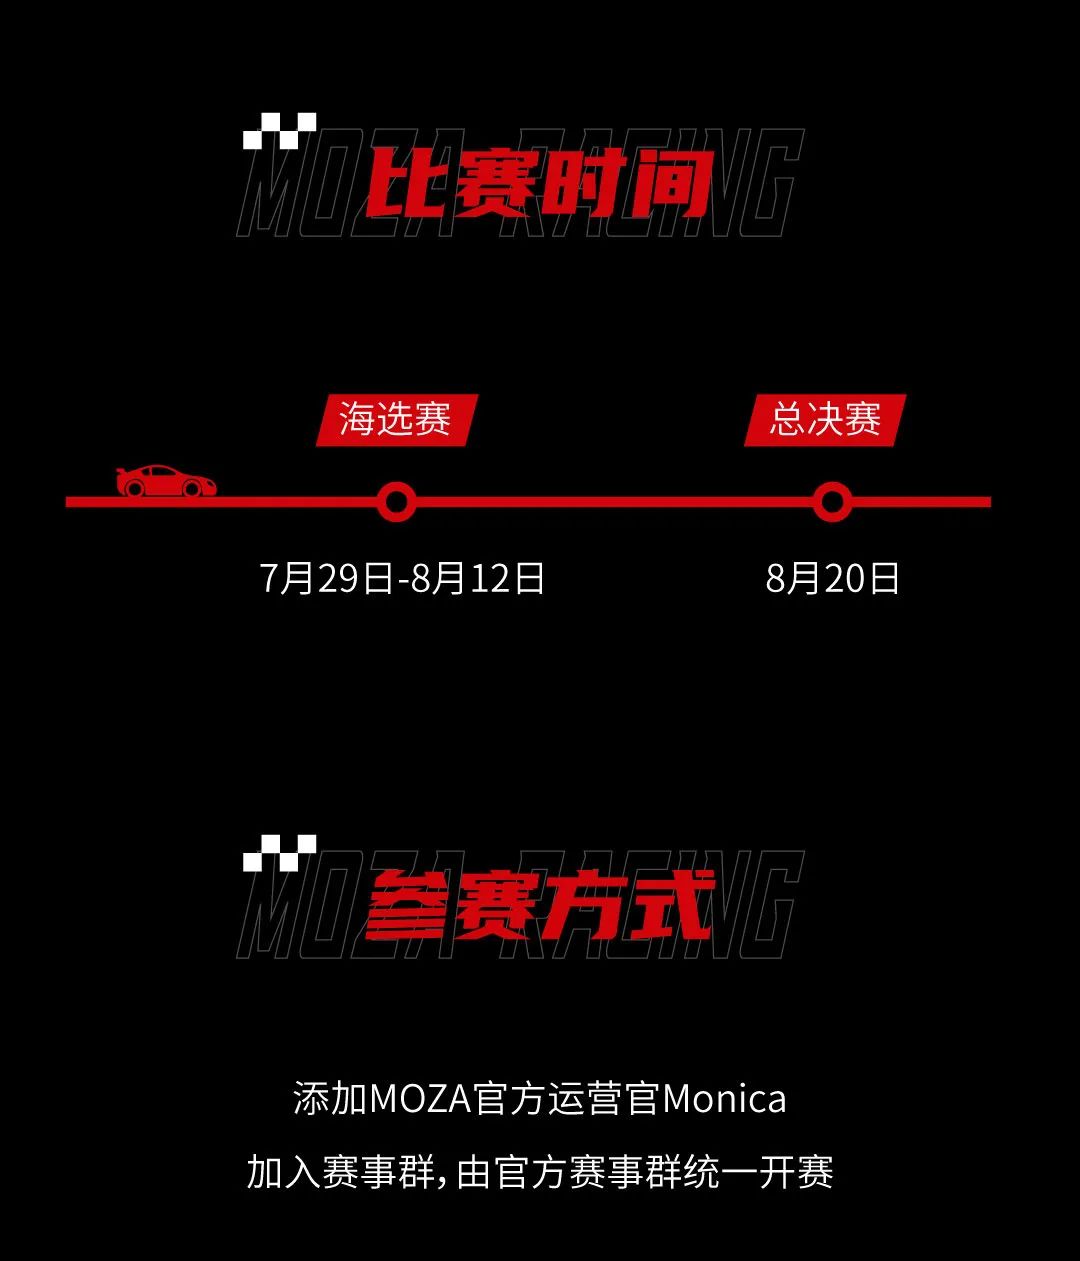 MOZA与上海天马赛车场达成战略合作并同步发起“天魔杯”线上挑战赛！